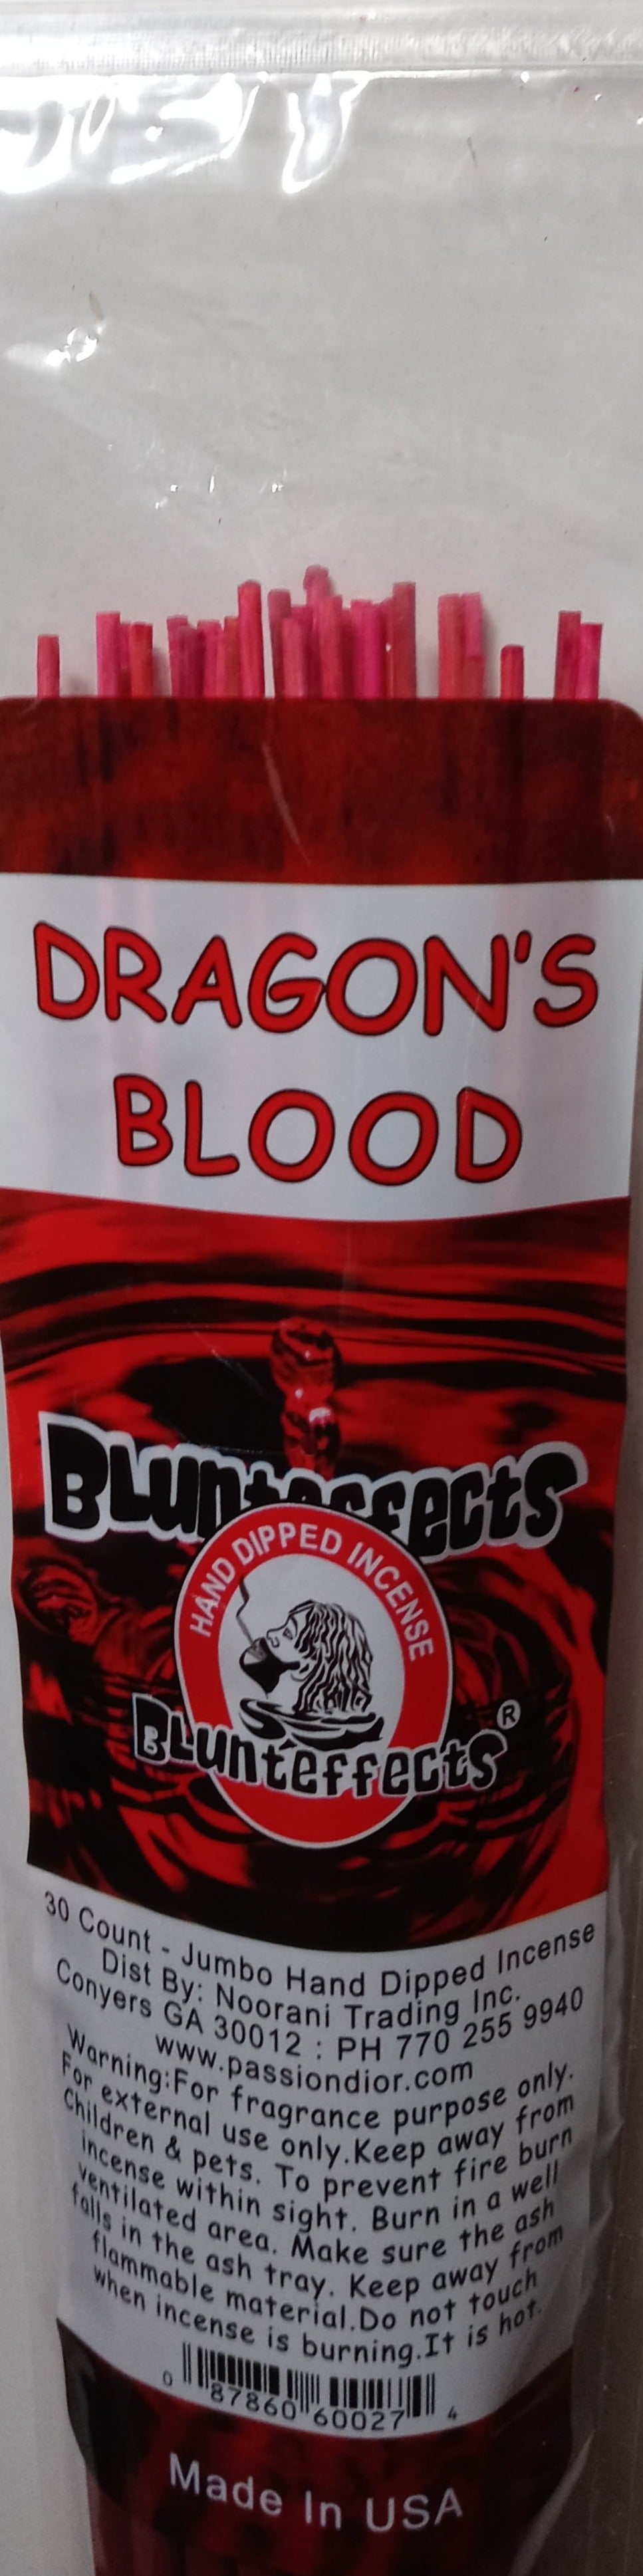 Blunteffects Dragon's Blood 19 Inch Jumbo Incense Sticks -- 30 Sticks